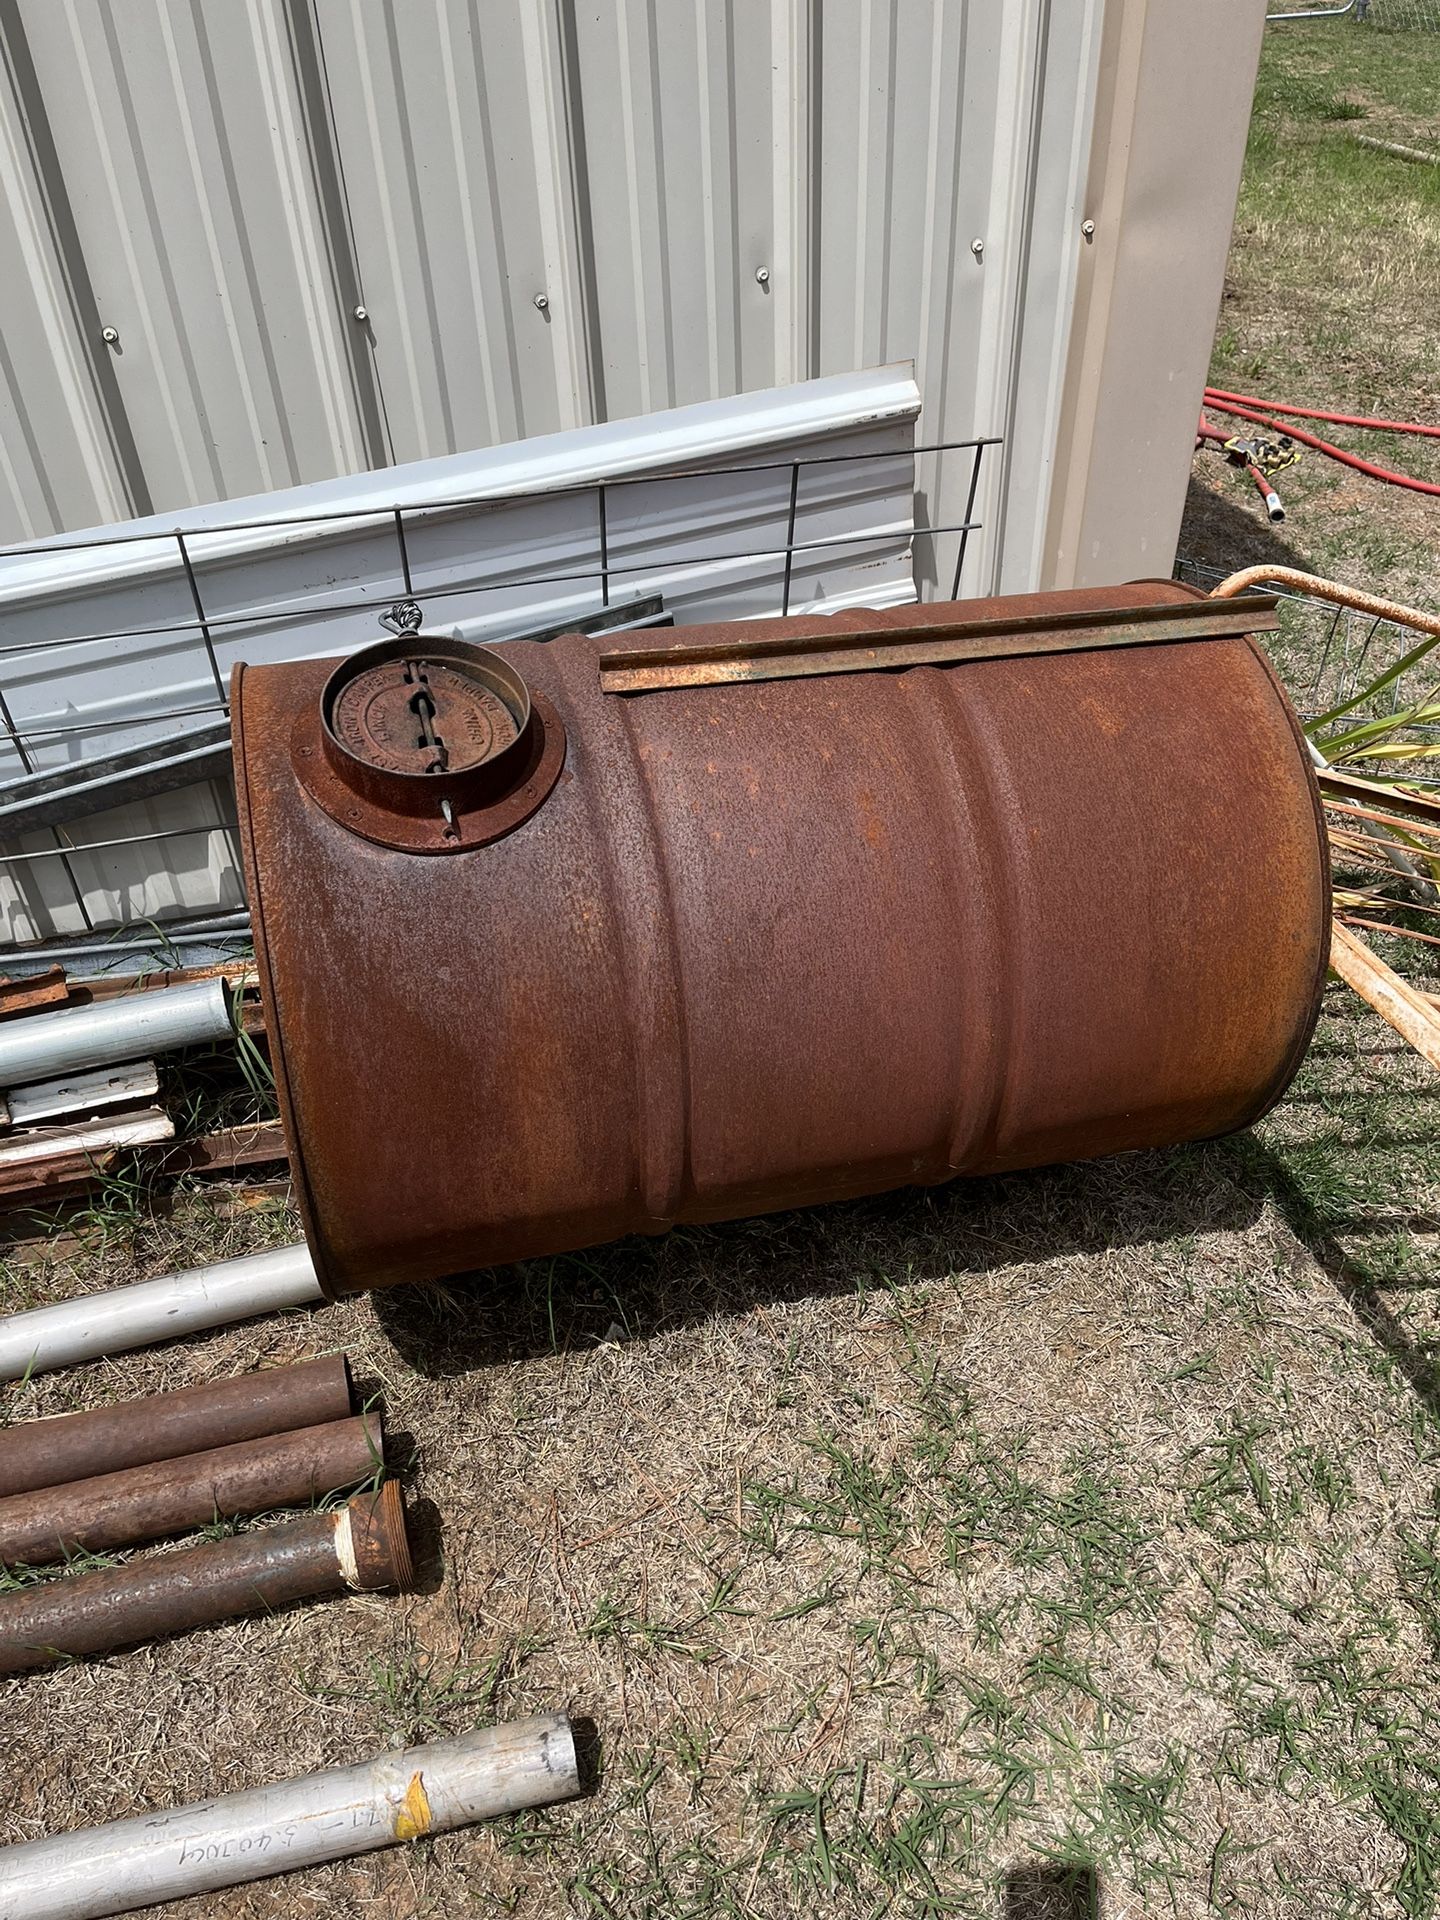 Barrel Heater